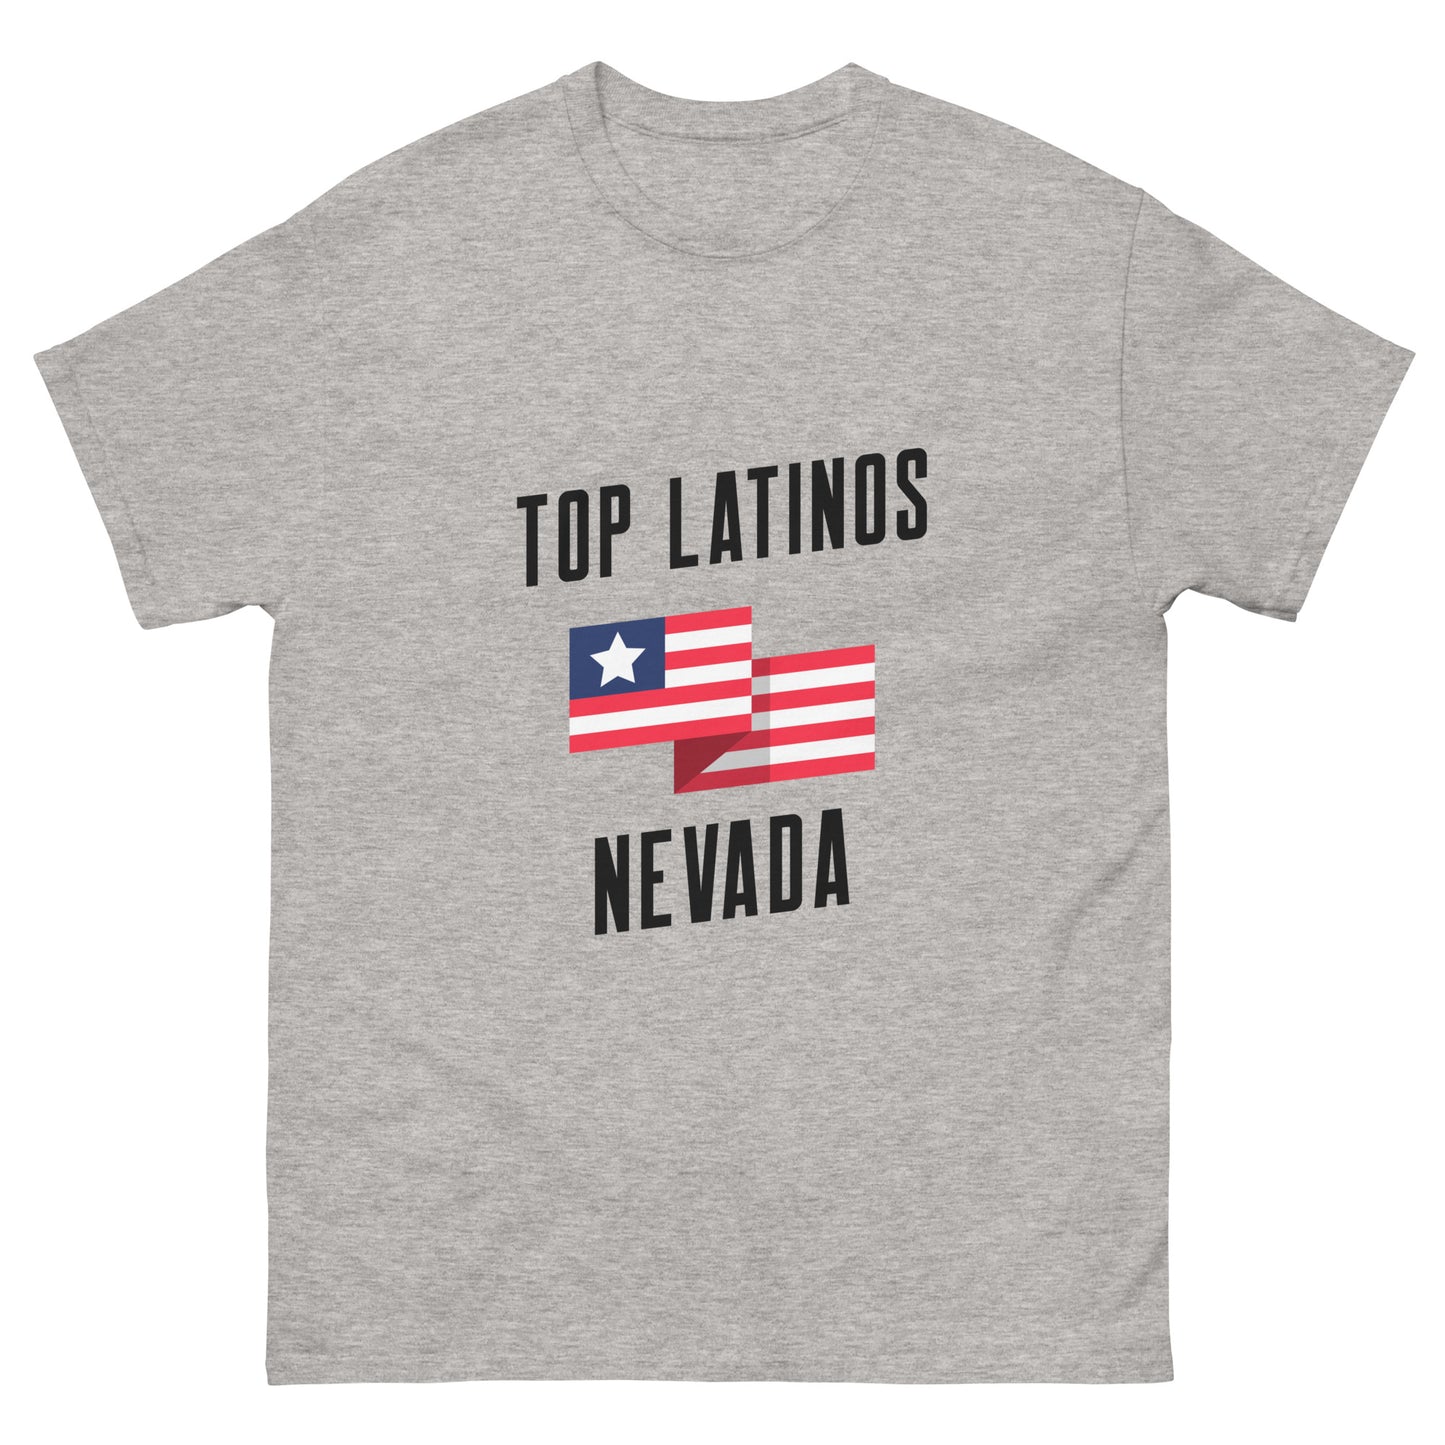 Top Latinos Nevada classic tee